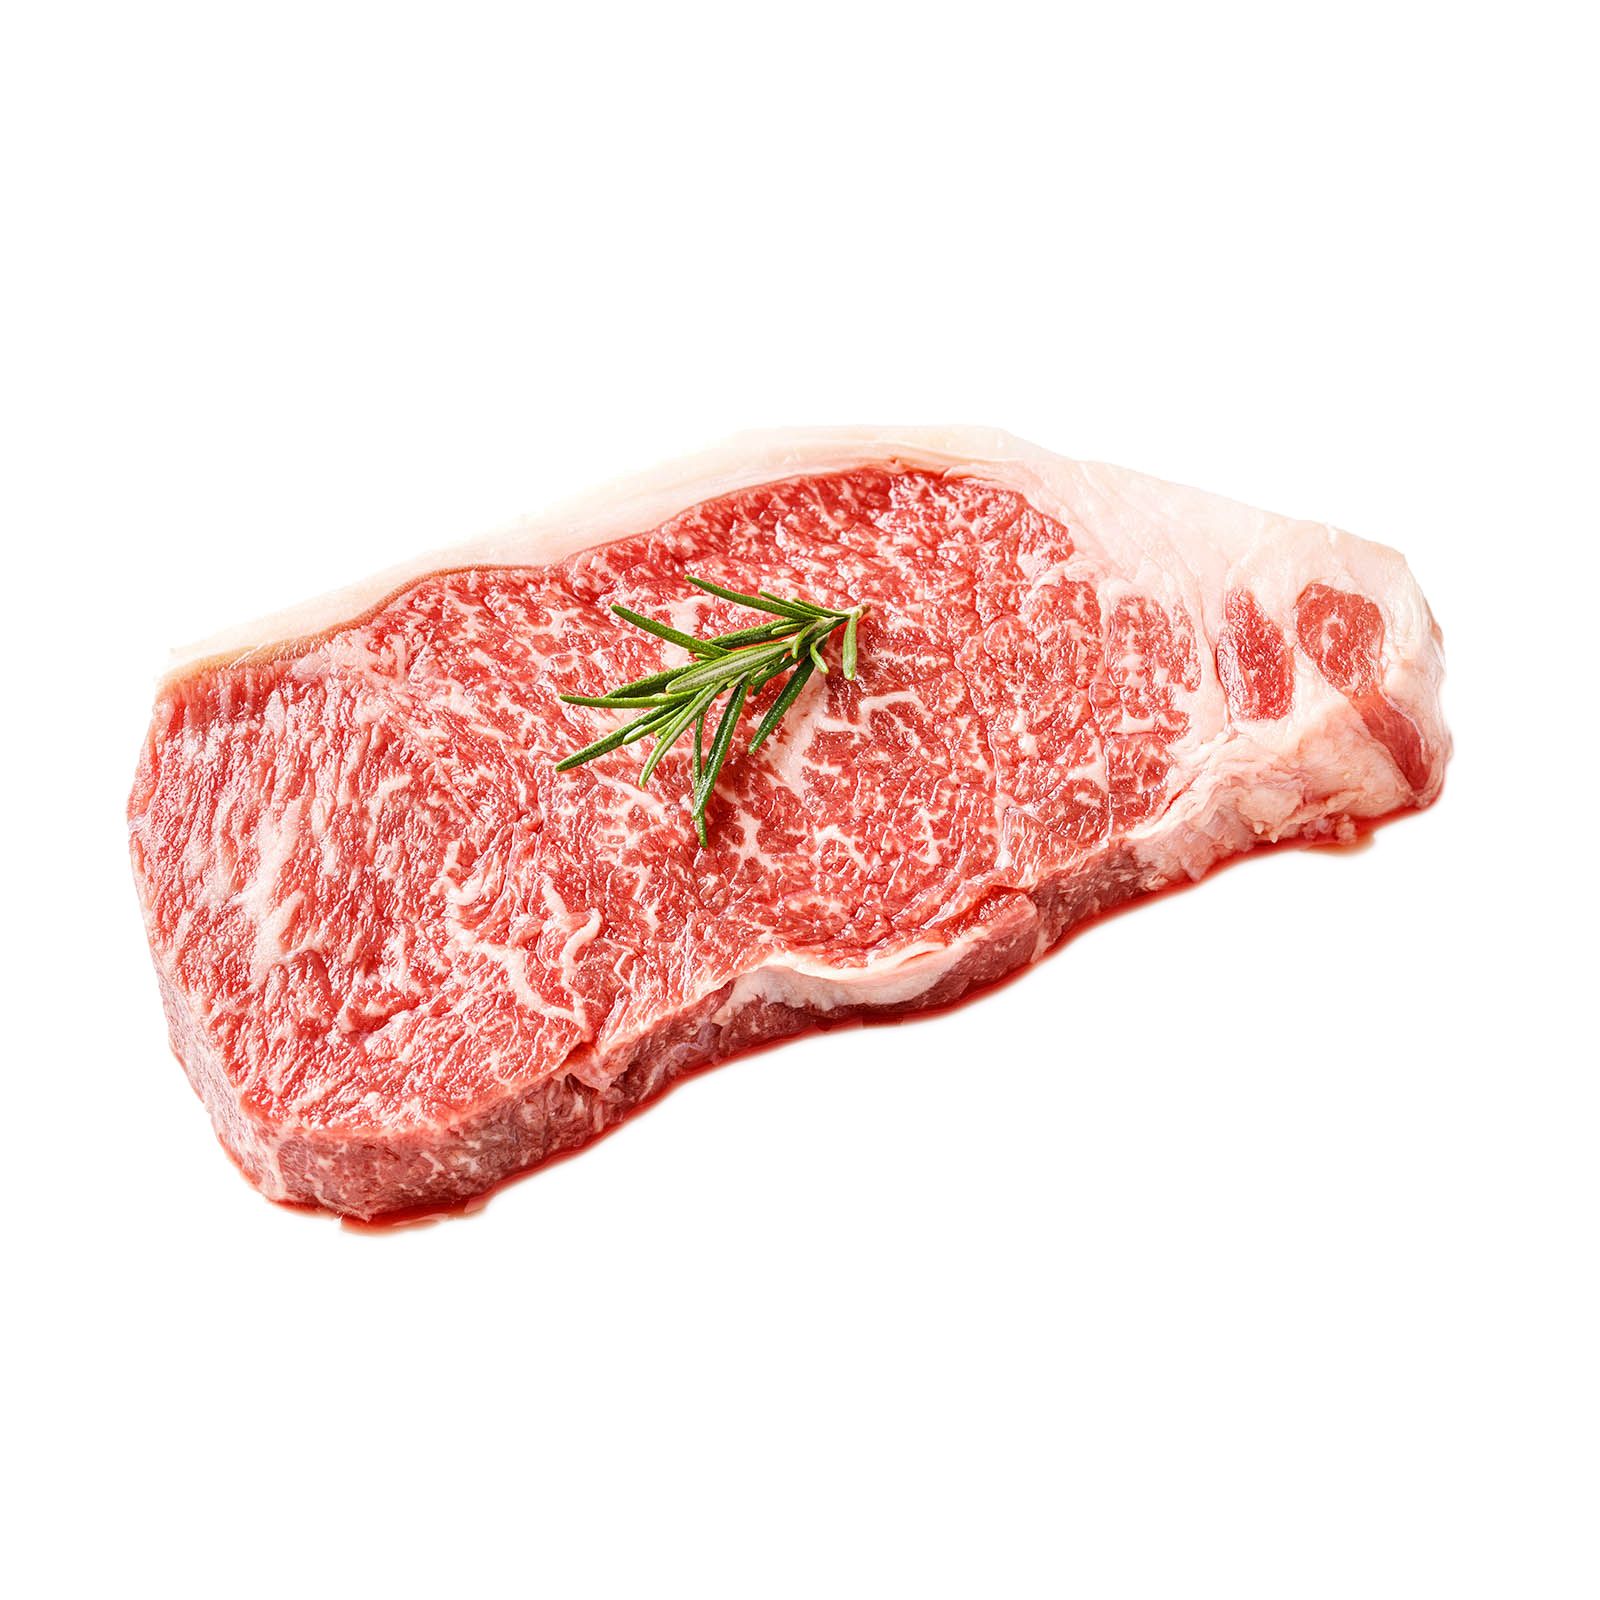 Premium Bulk Beef for Sale